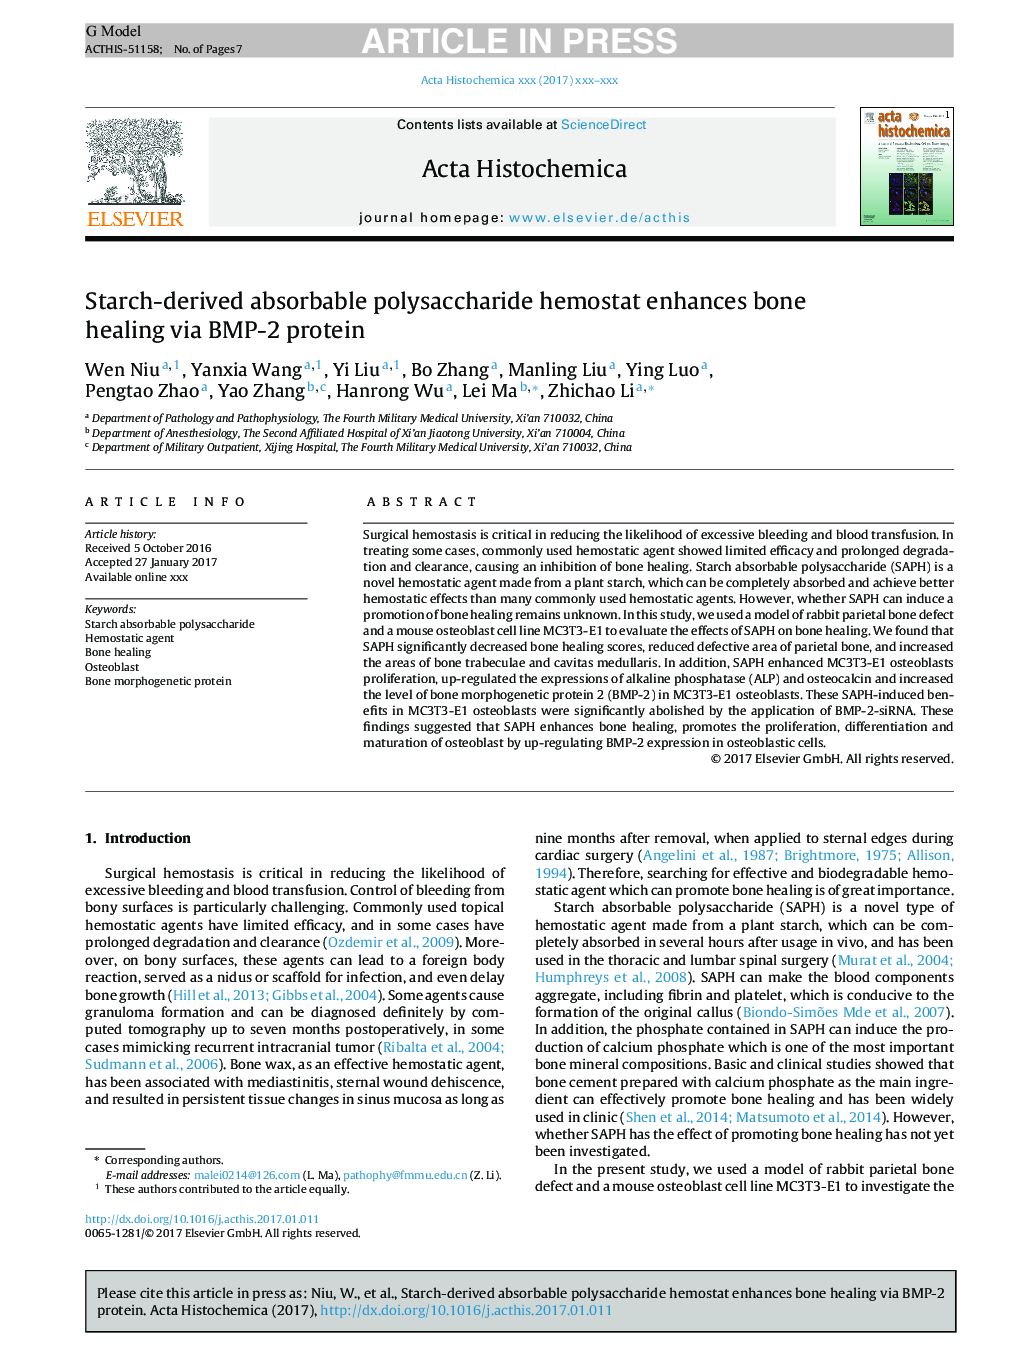 Starch-derived absorbable polysaccharide hemostat enhances bone healing via BMP-2 protein